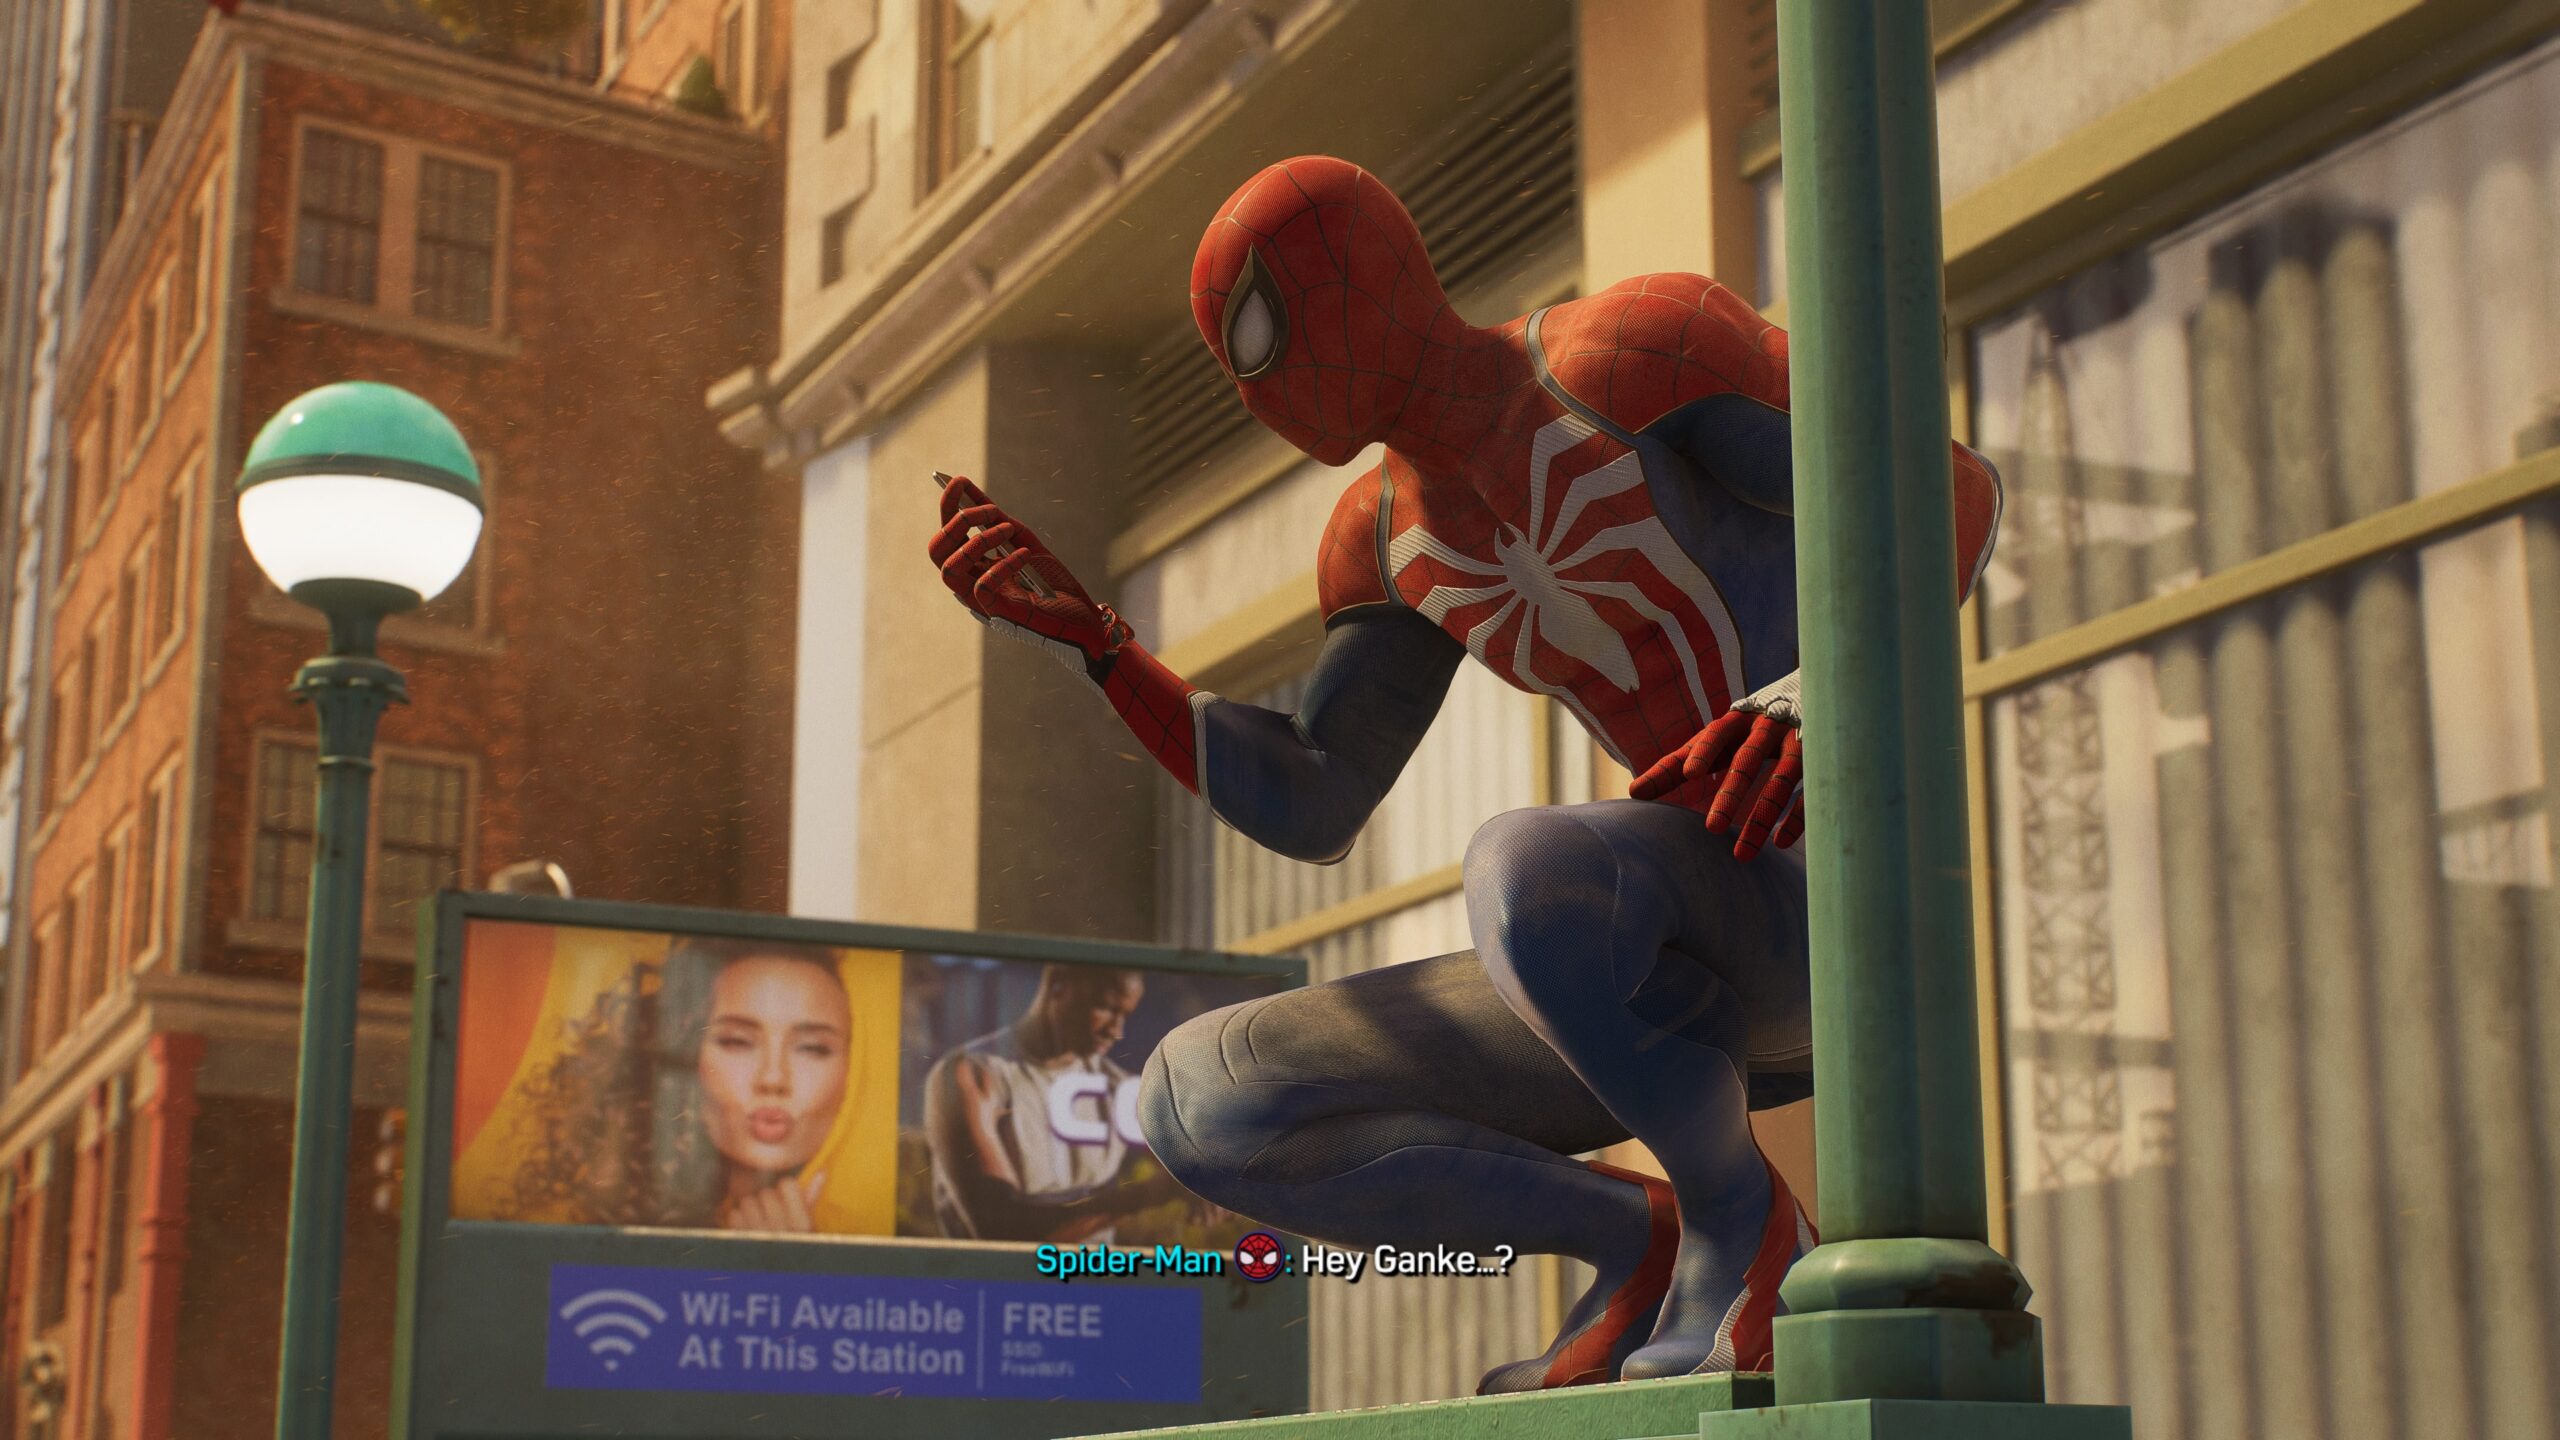 Sony PS5 Spider-Man 2 Miles Morales Tokusatsu Suit - Digital